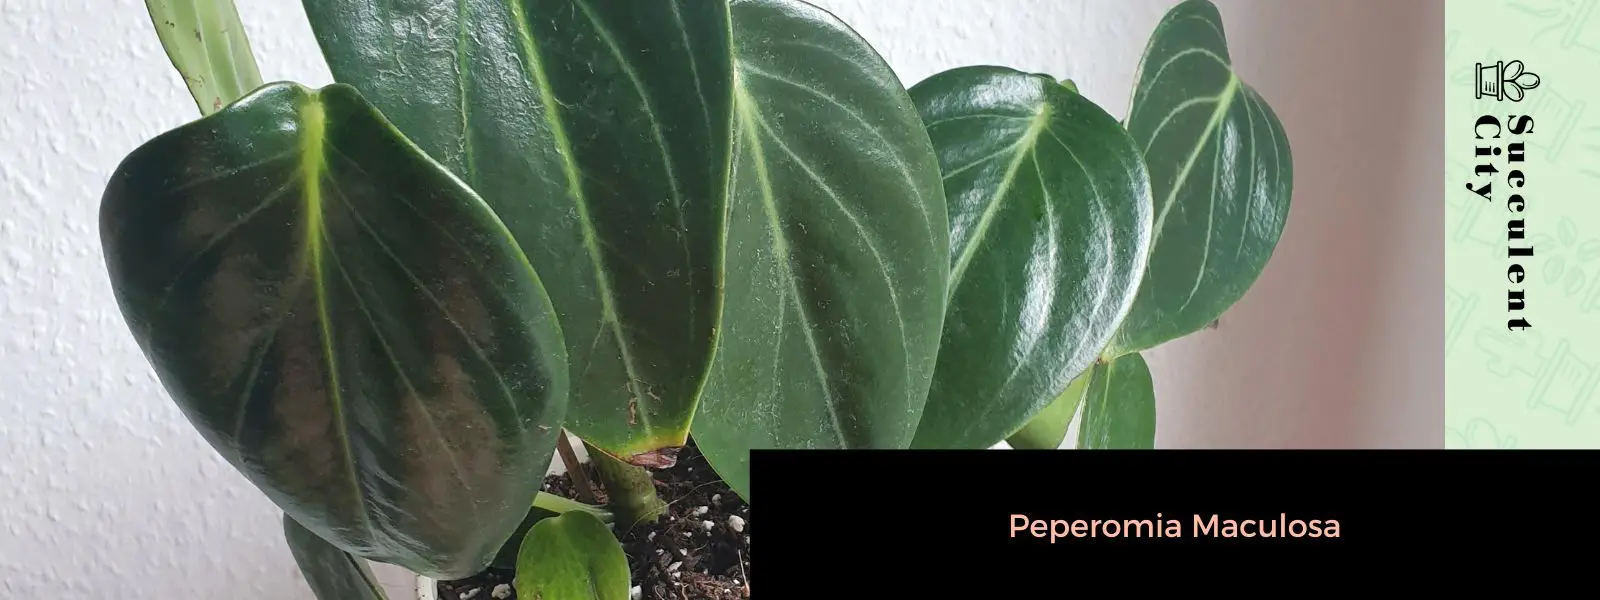 peperomia maculosa